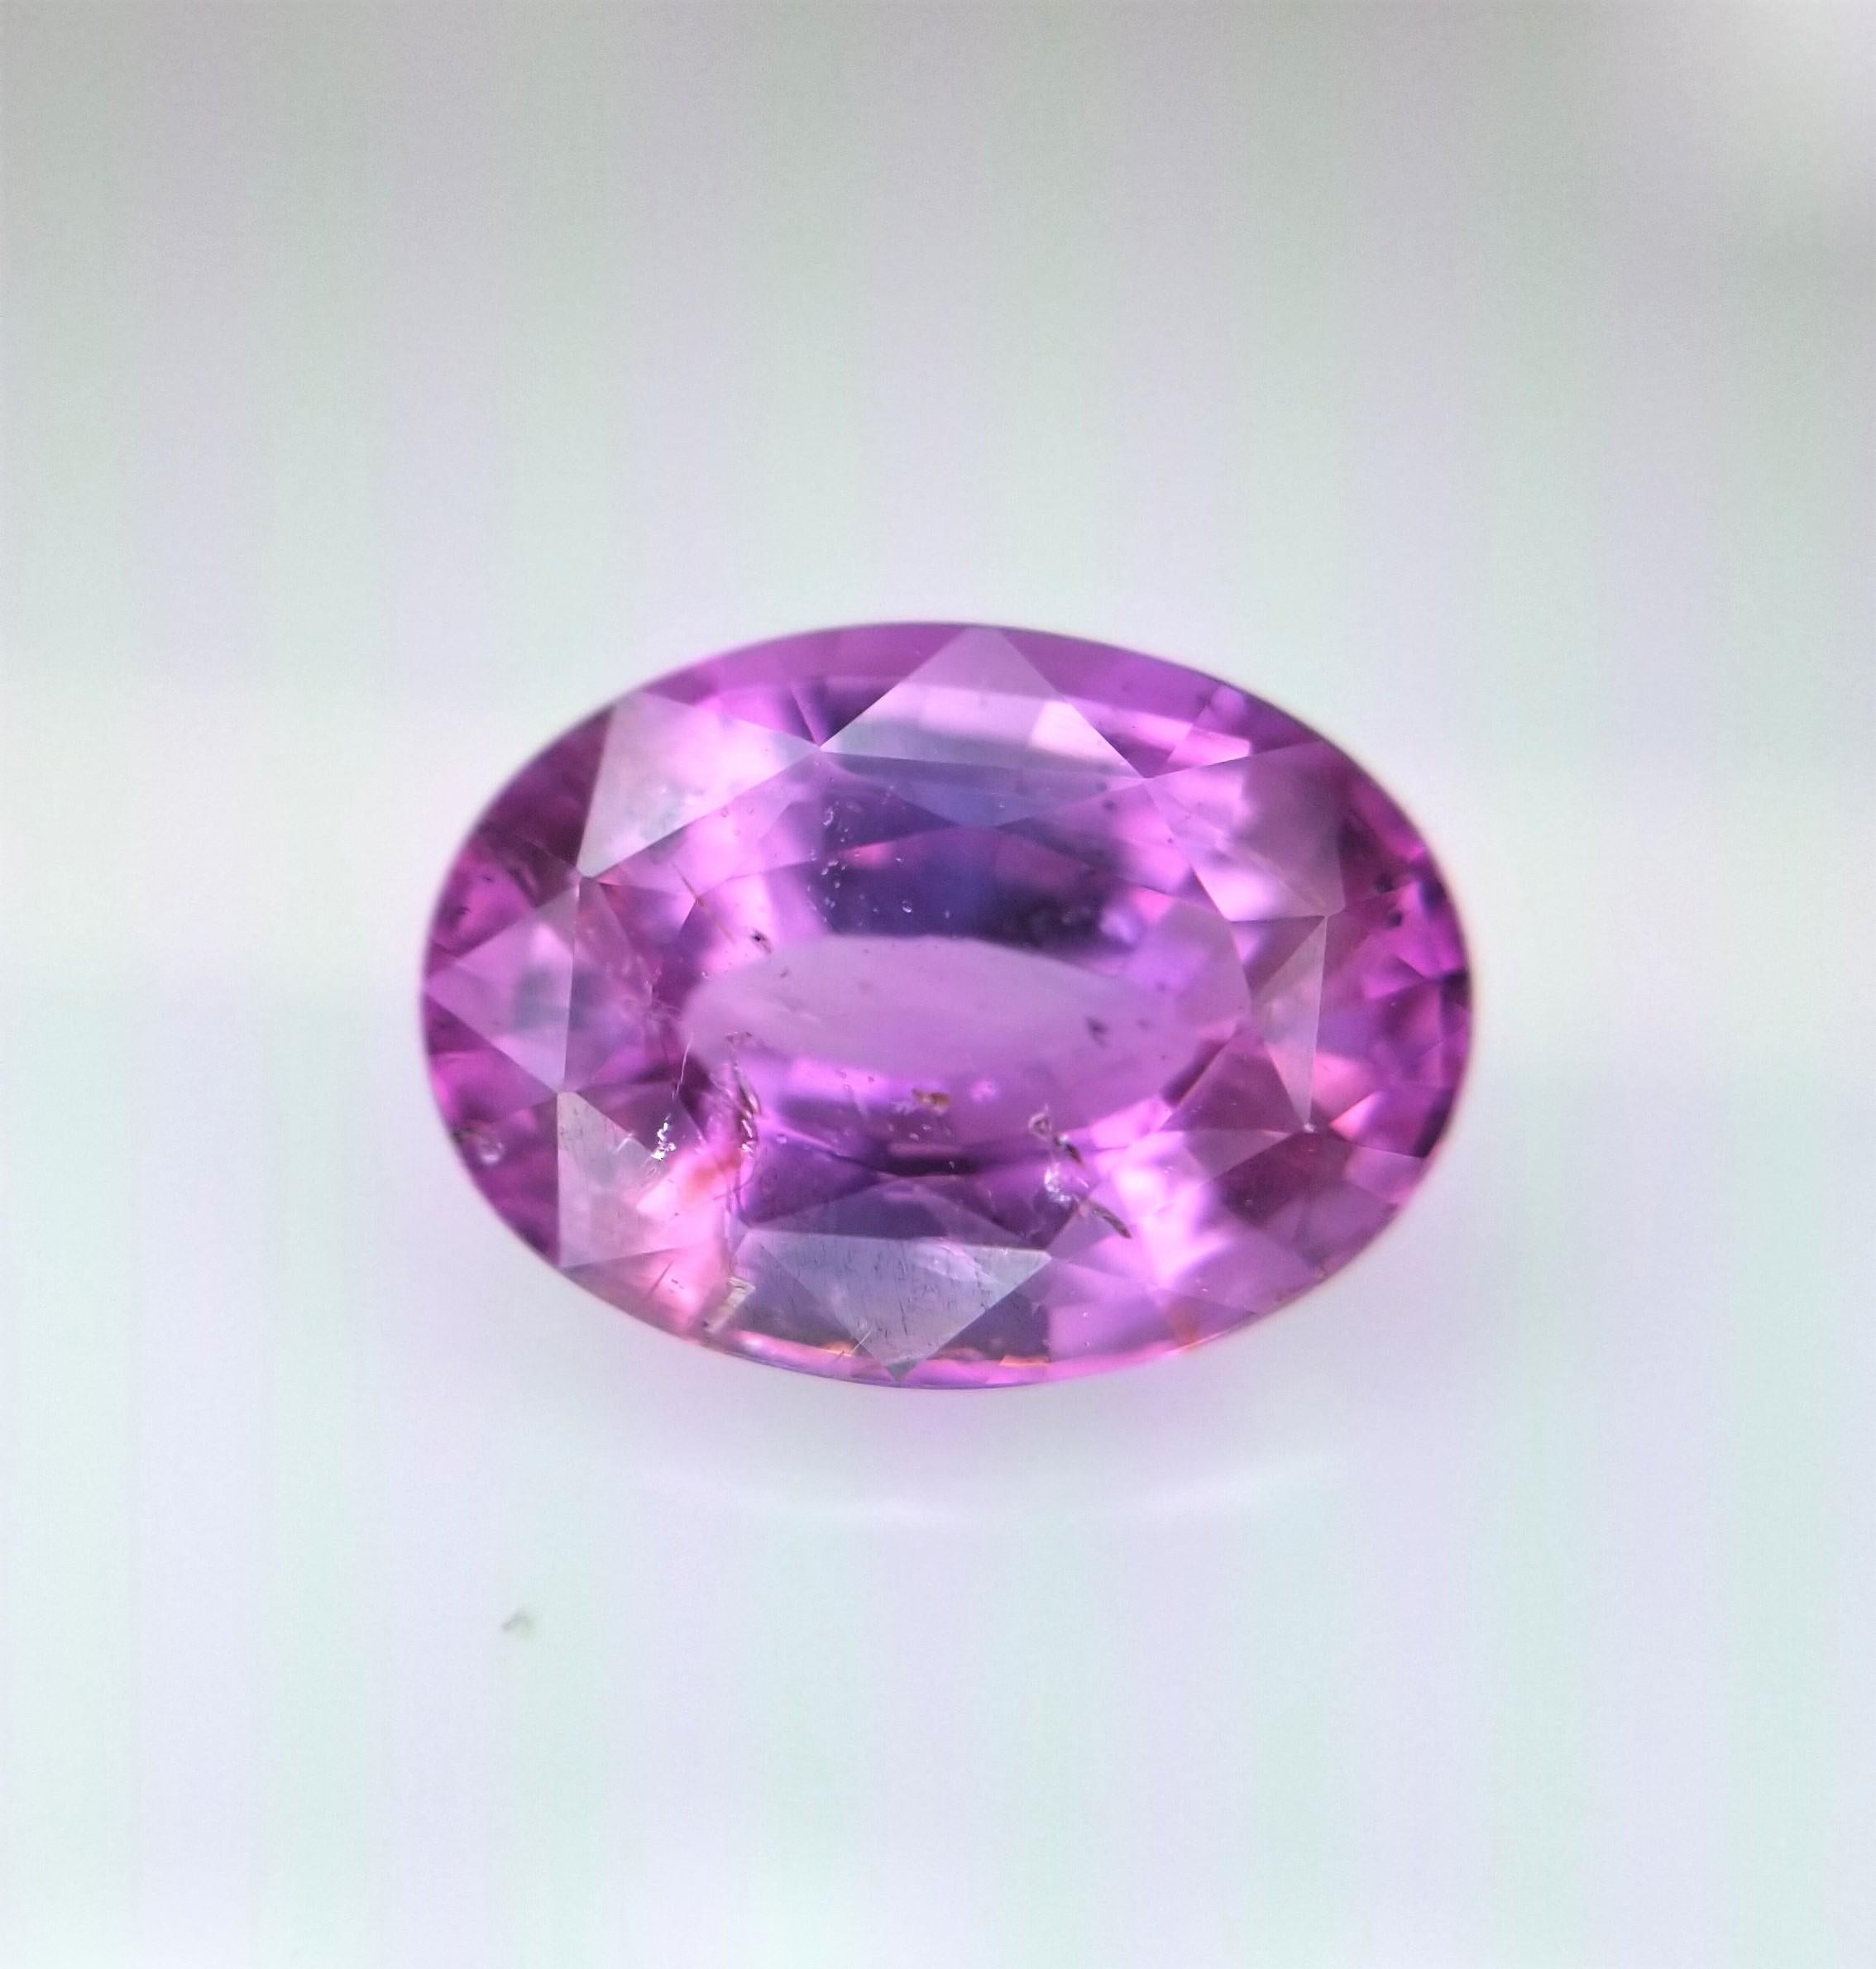 Contemporary Berberyn Certified 3.13 Carat Oval Cut Pink Sapphire Pendant in 18k For Sale